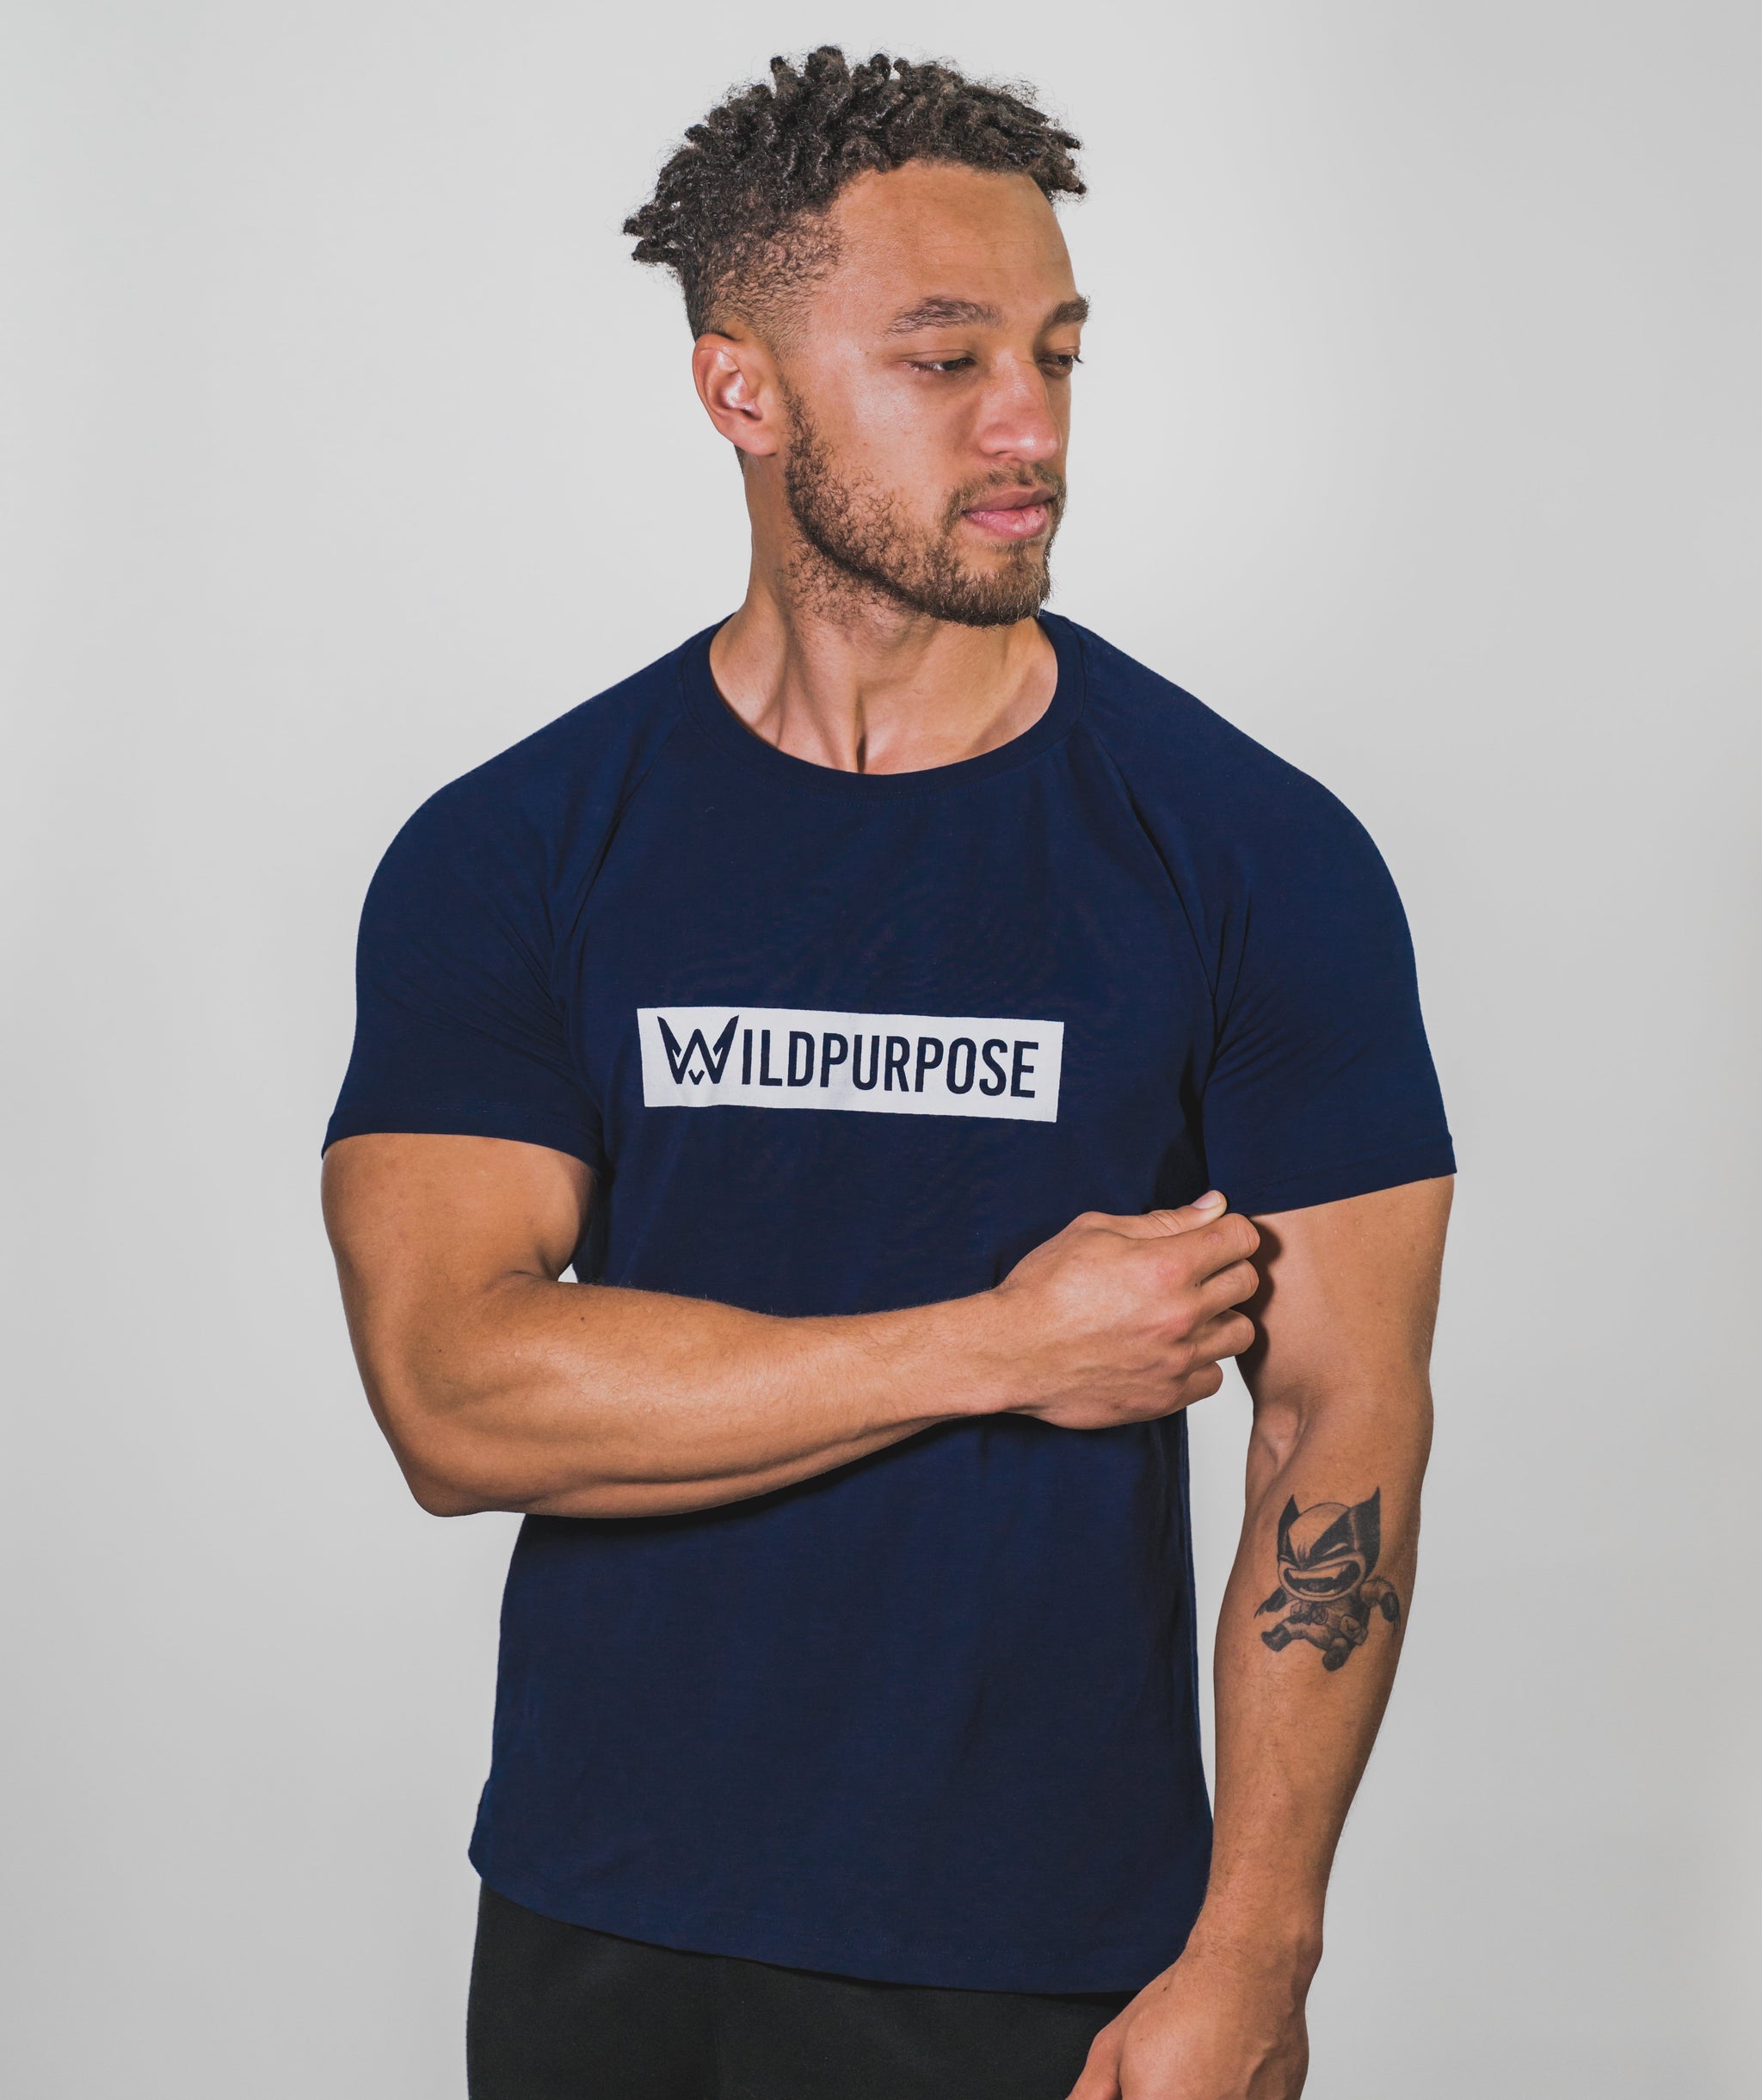 Men's Workout Shirts & Tops